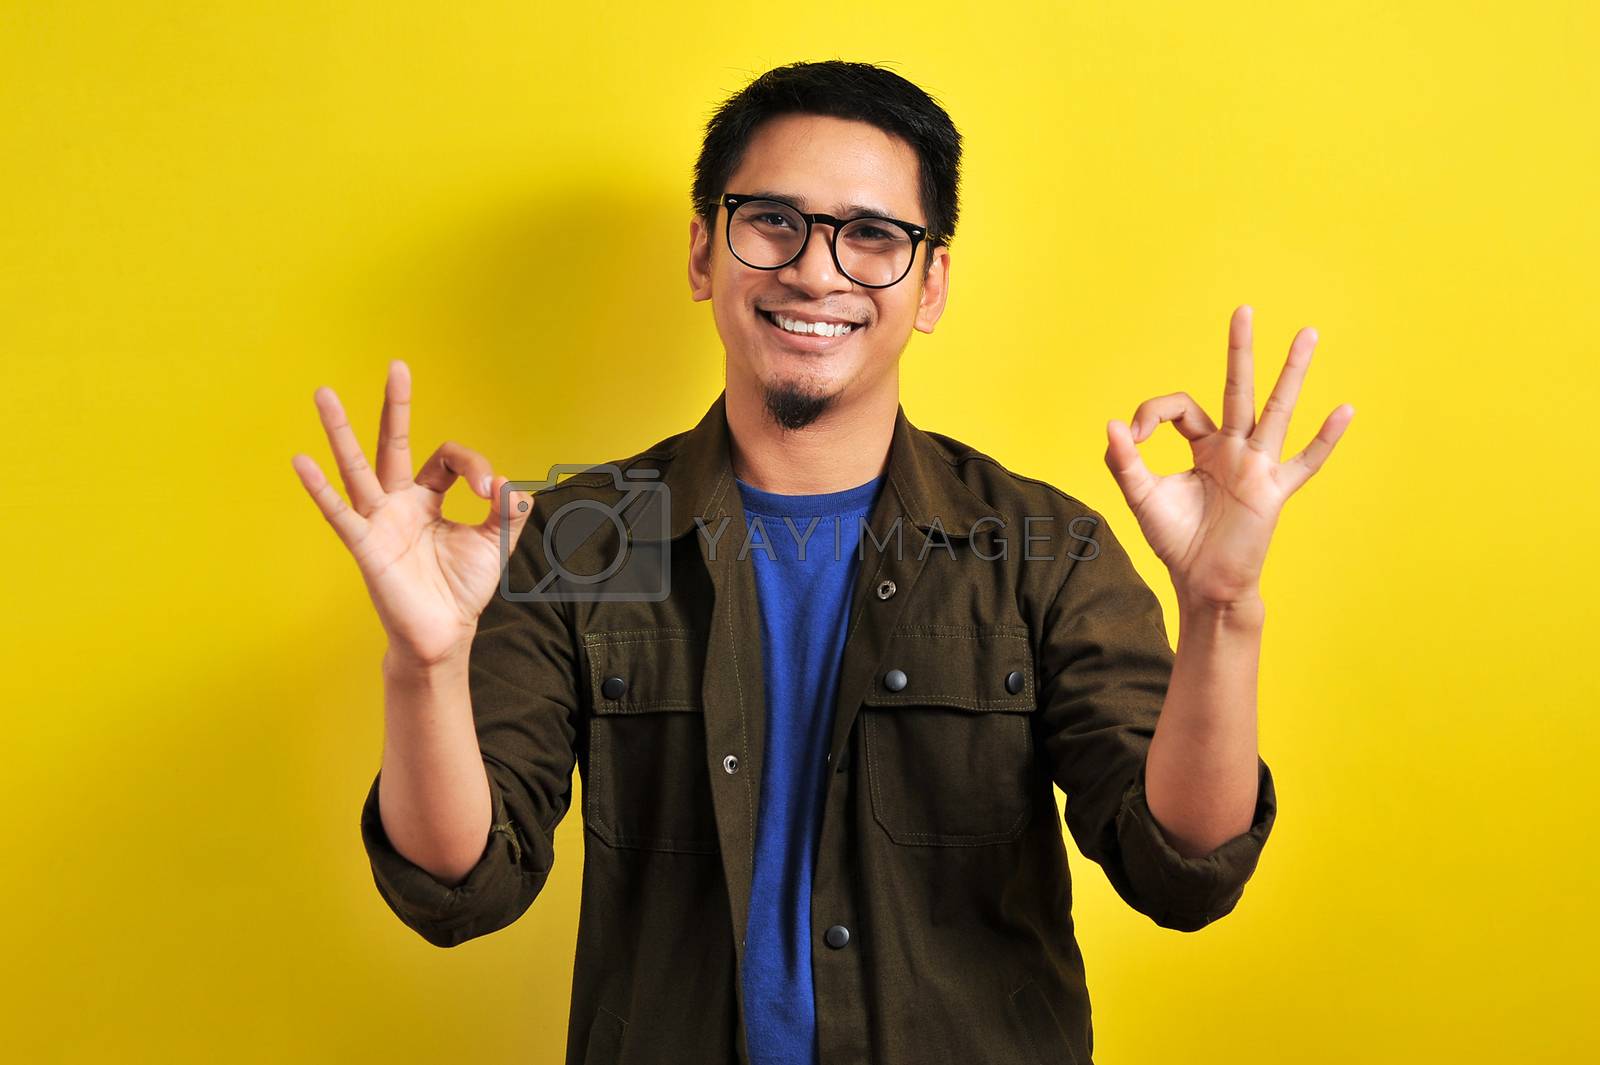 Royalty free image of Indonesian man smiling doing double okay wearing eyeglasses by heruan1507